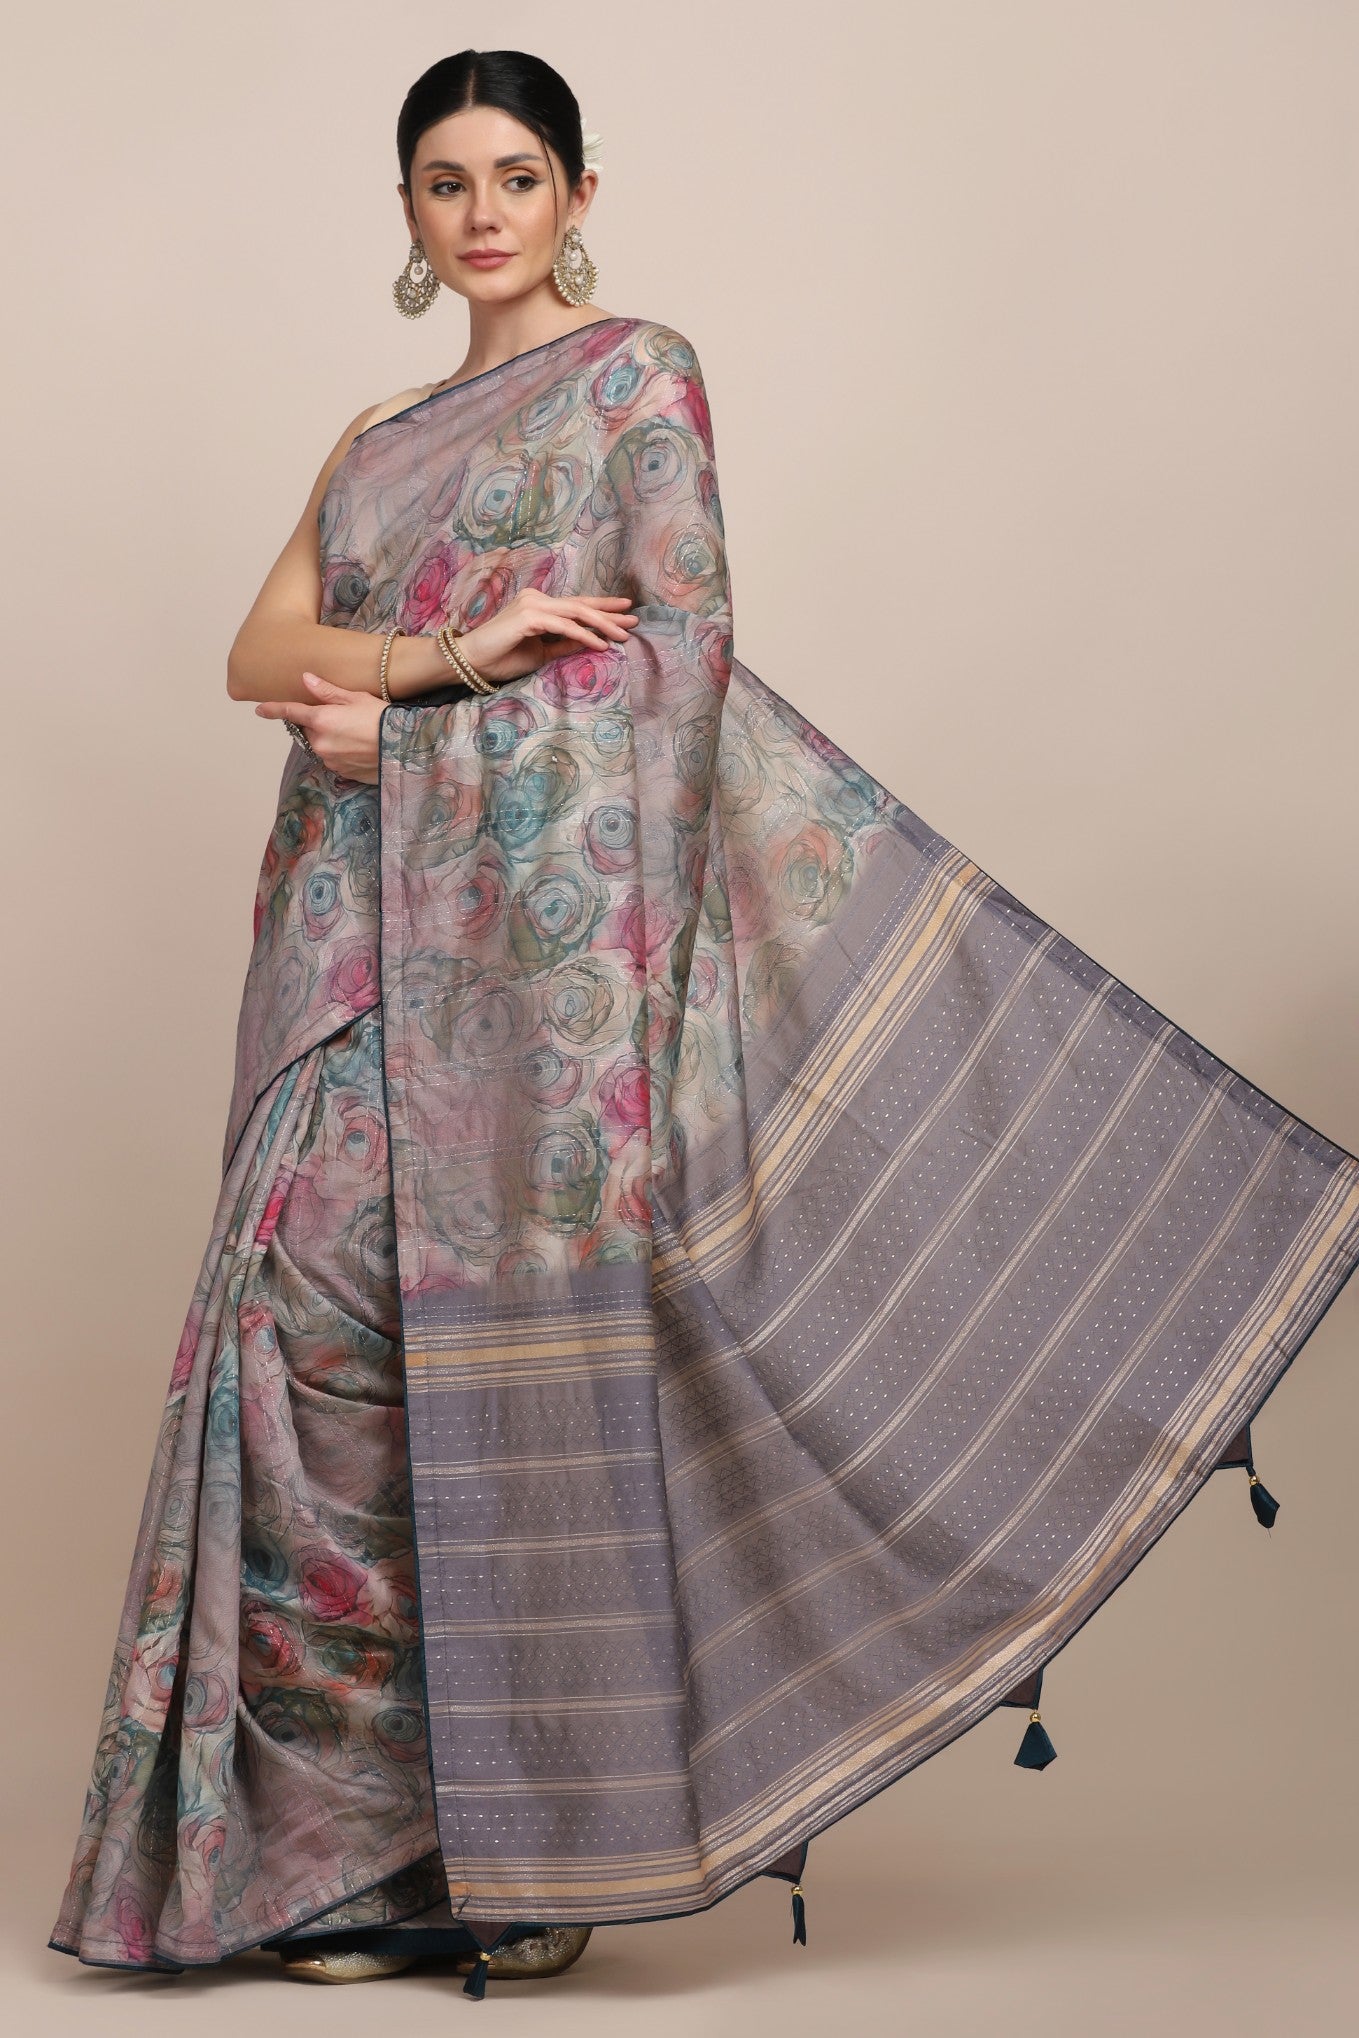 Classy multi color floral motif printed saree